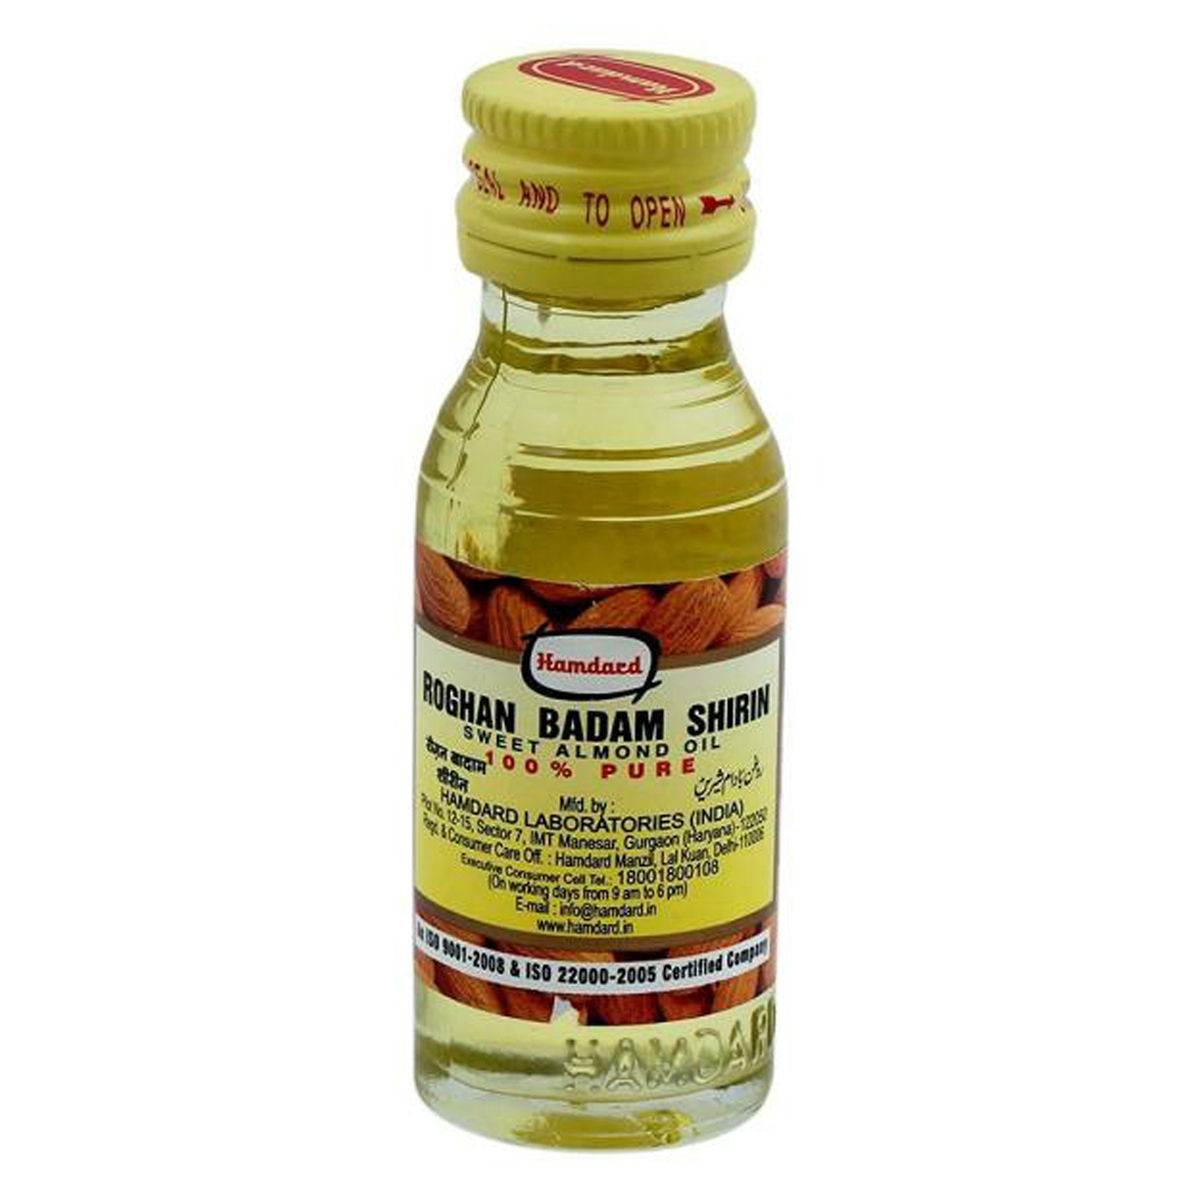 Buy Hamdard Roghan Badam Shirin Almond Oil, 25 ml Online